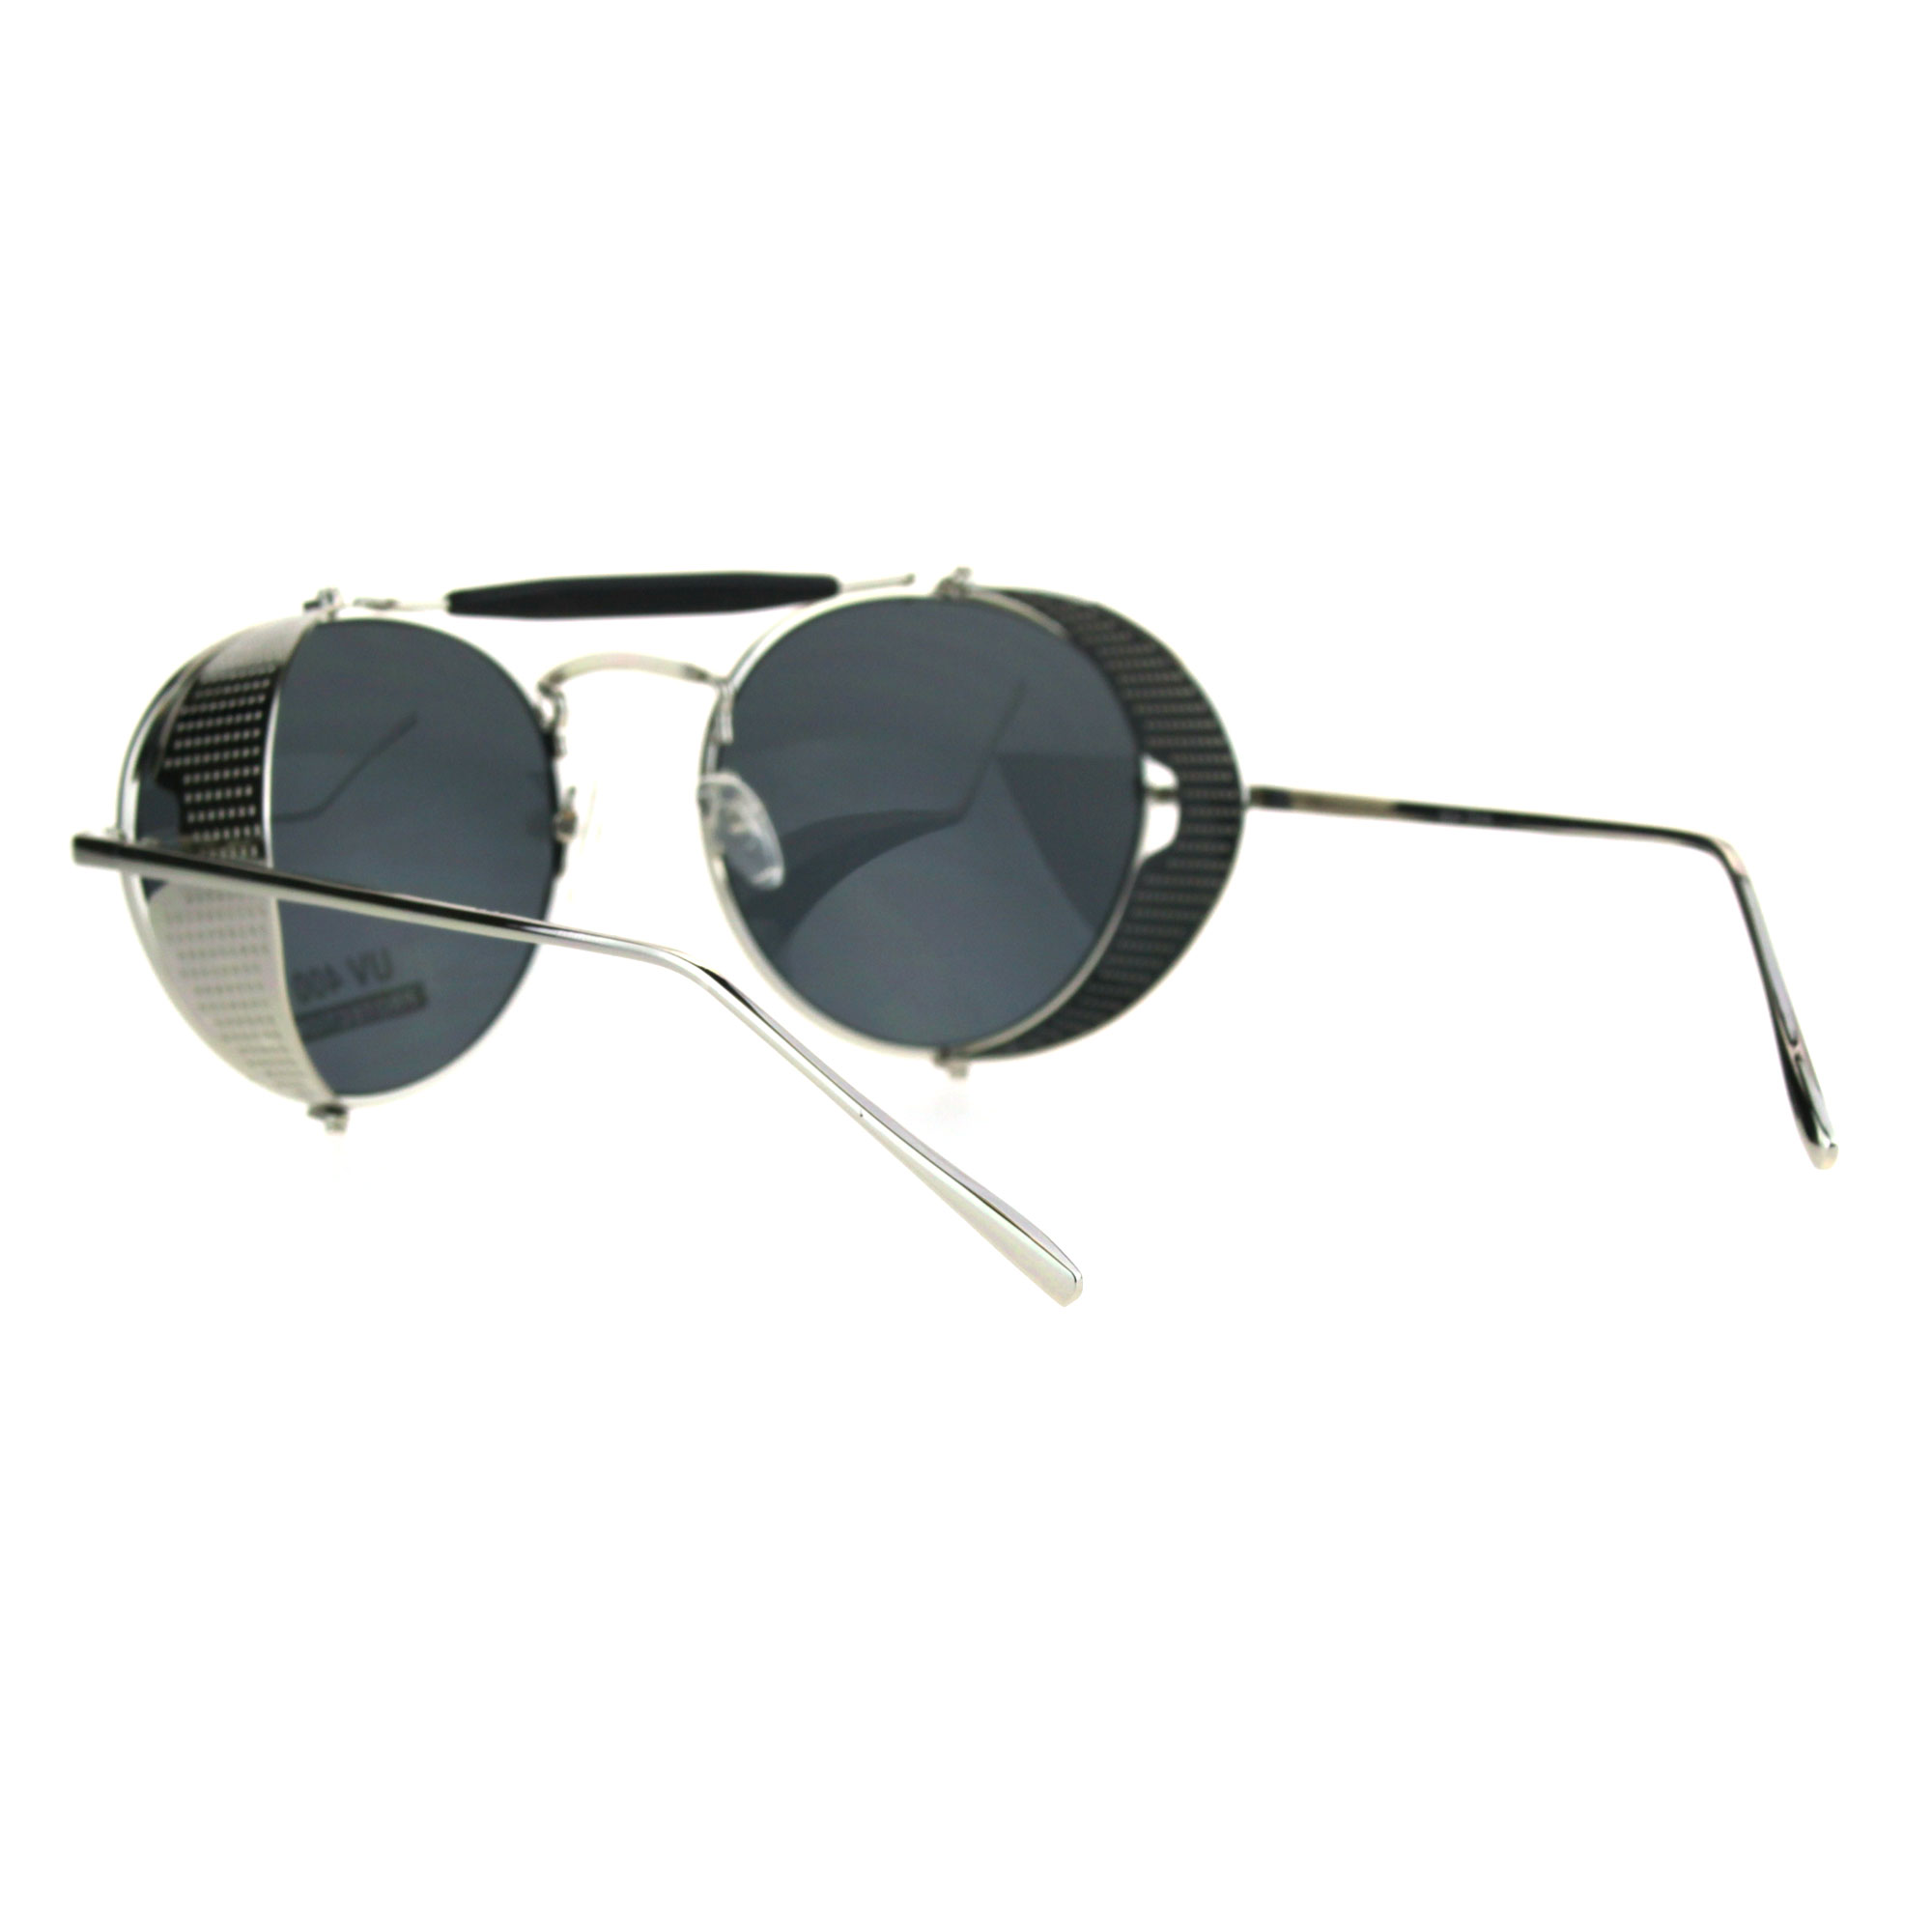 Folding Mesh Side Visor Retro Round Metal Cafe Racer Sunglasses | eBay